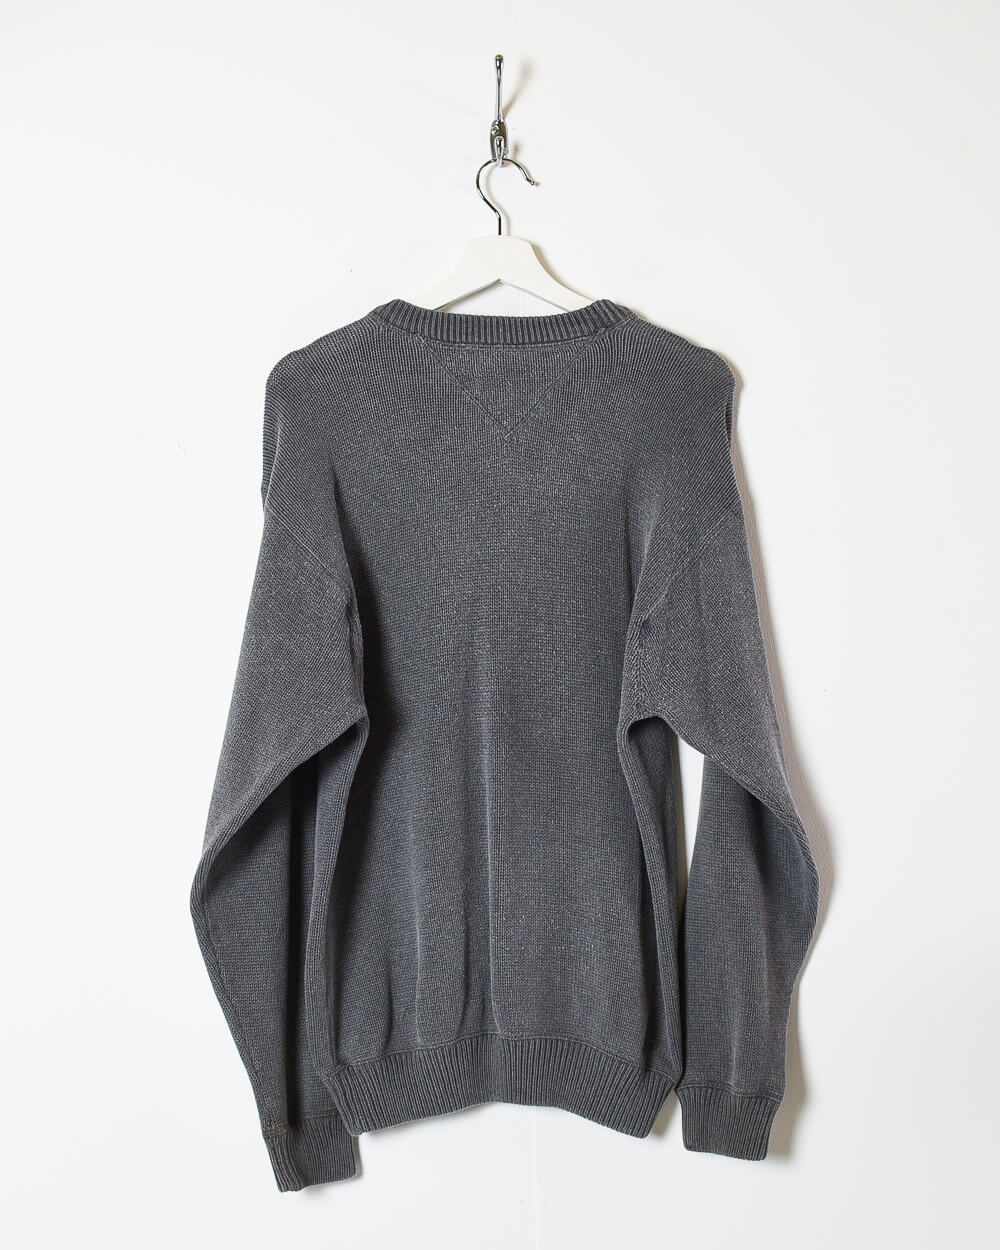 Stone Tommy Hilfiger Knitted Sweatshirt - Medium